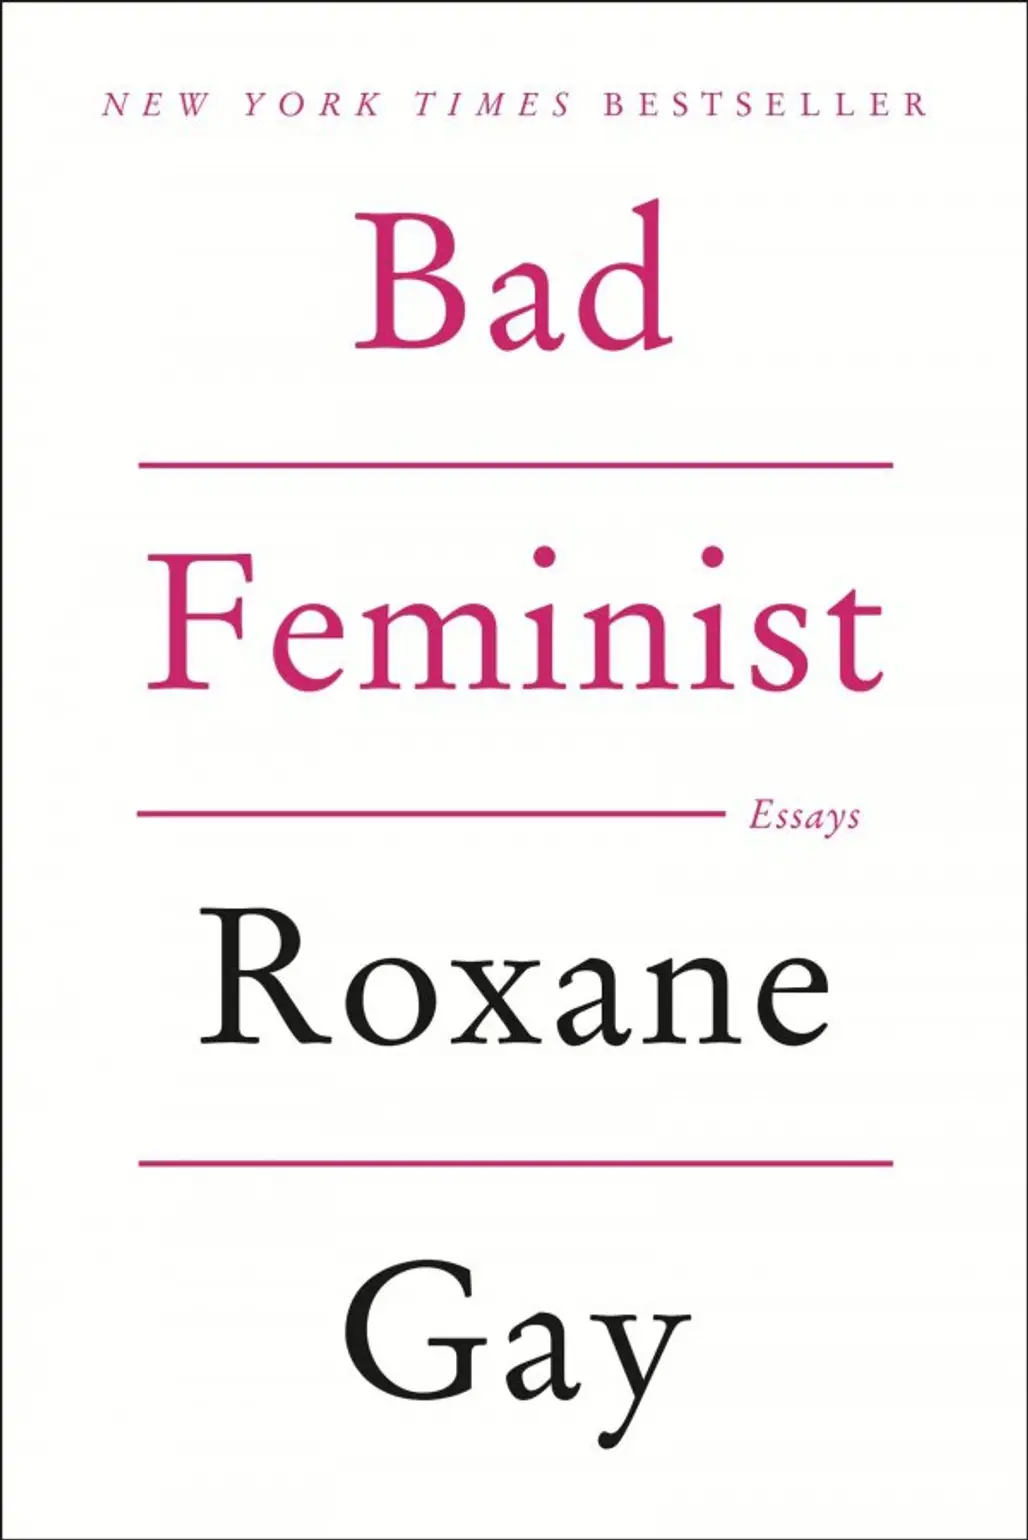 Bad Feminist by Roxanne Gay